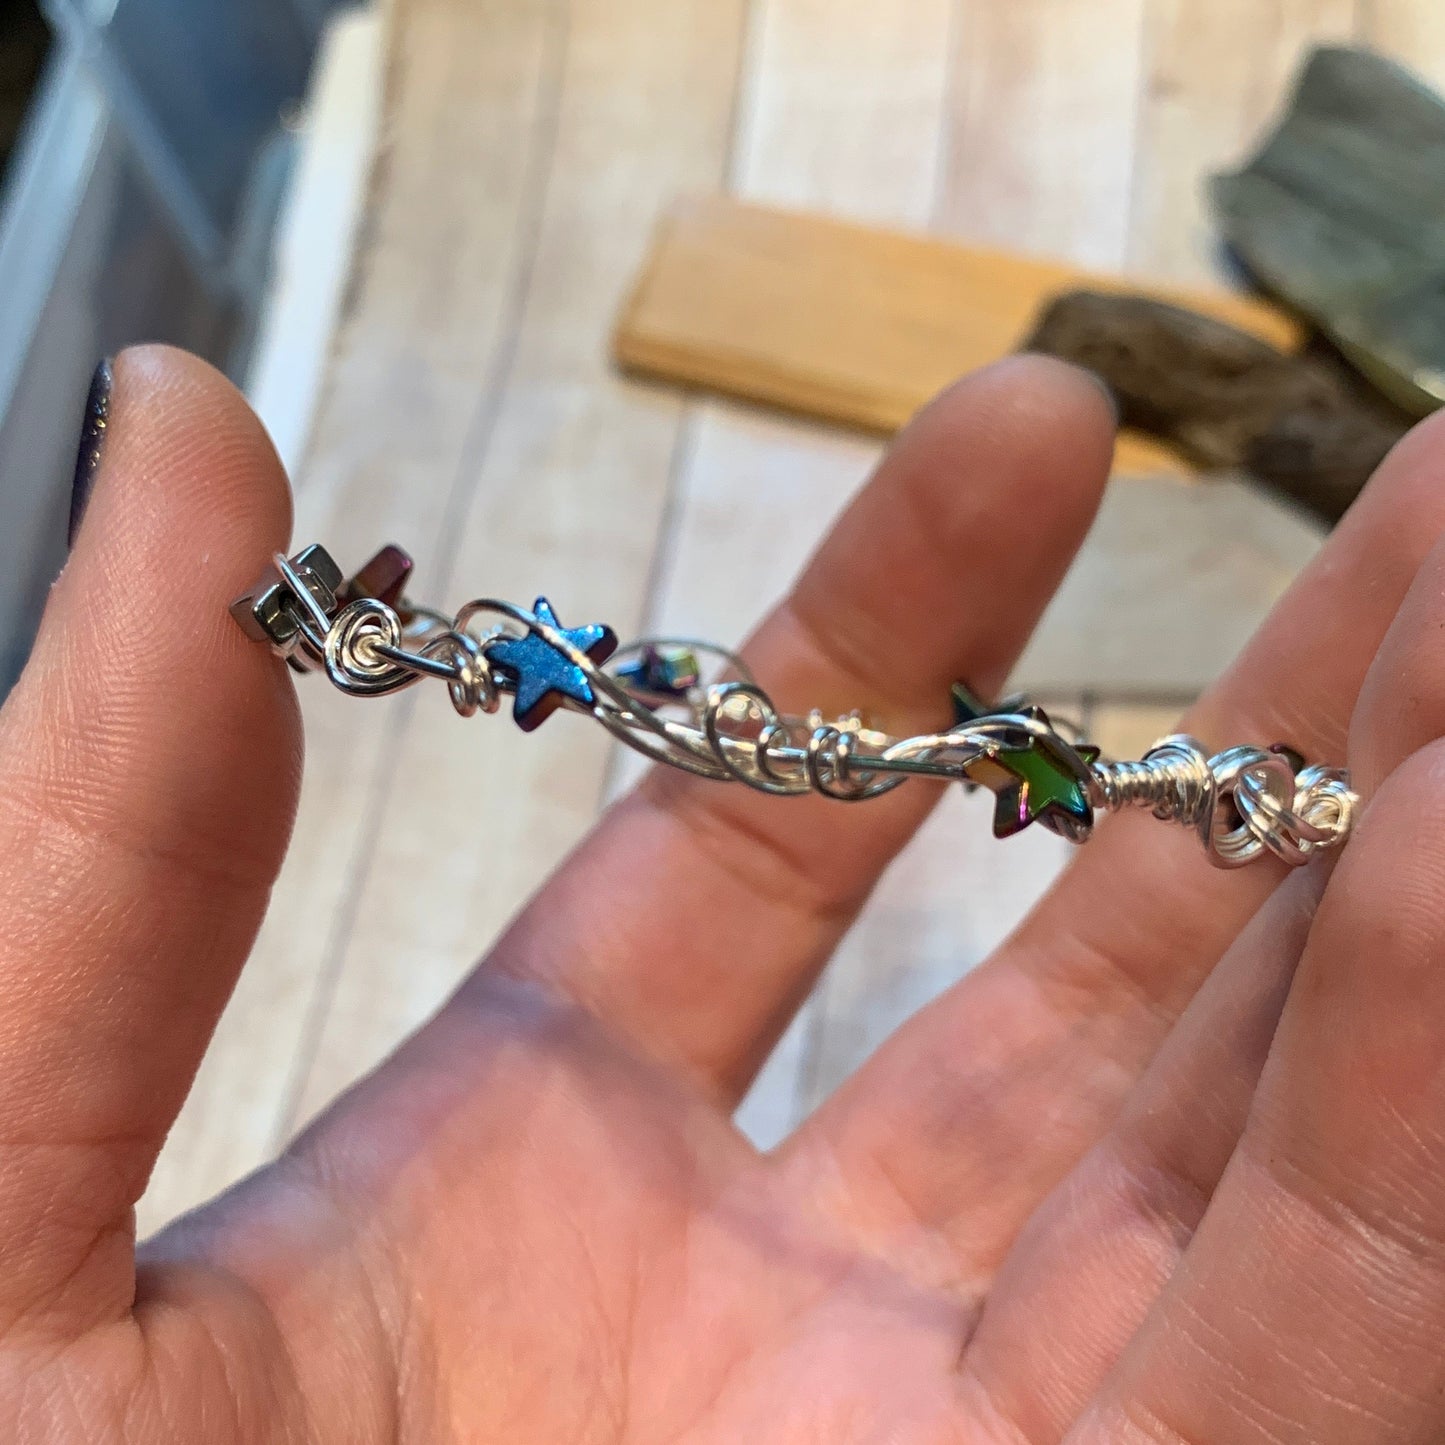 Skylit - rainbow bracelet #2